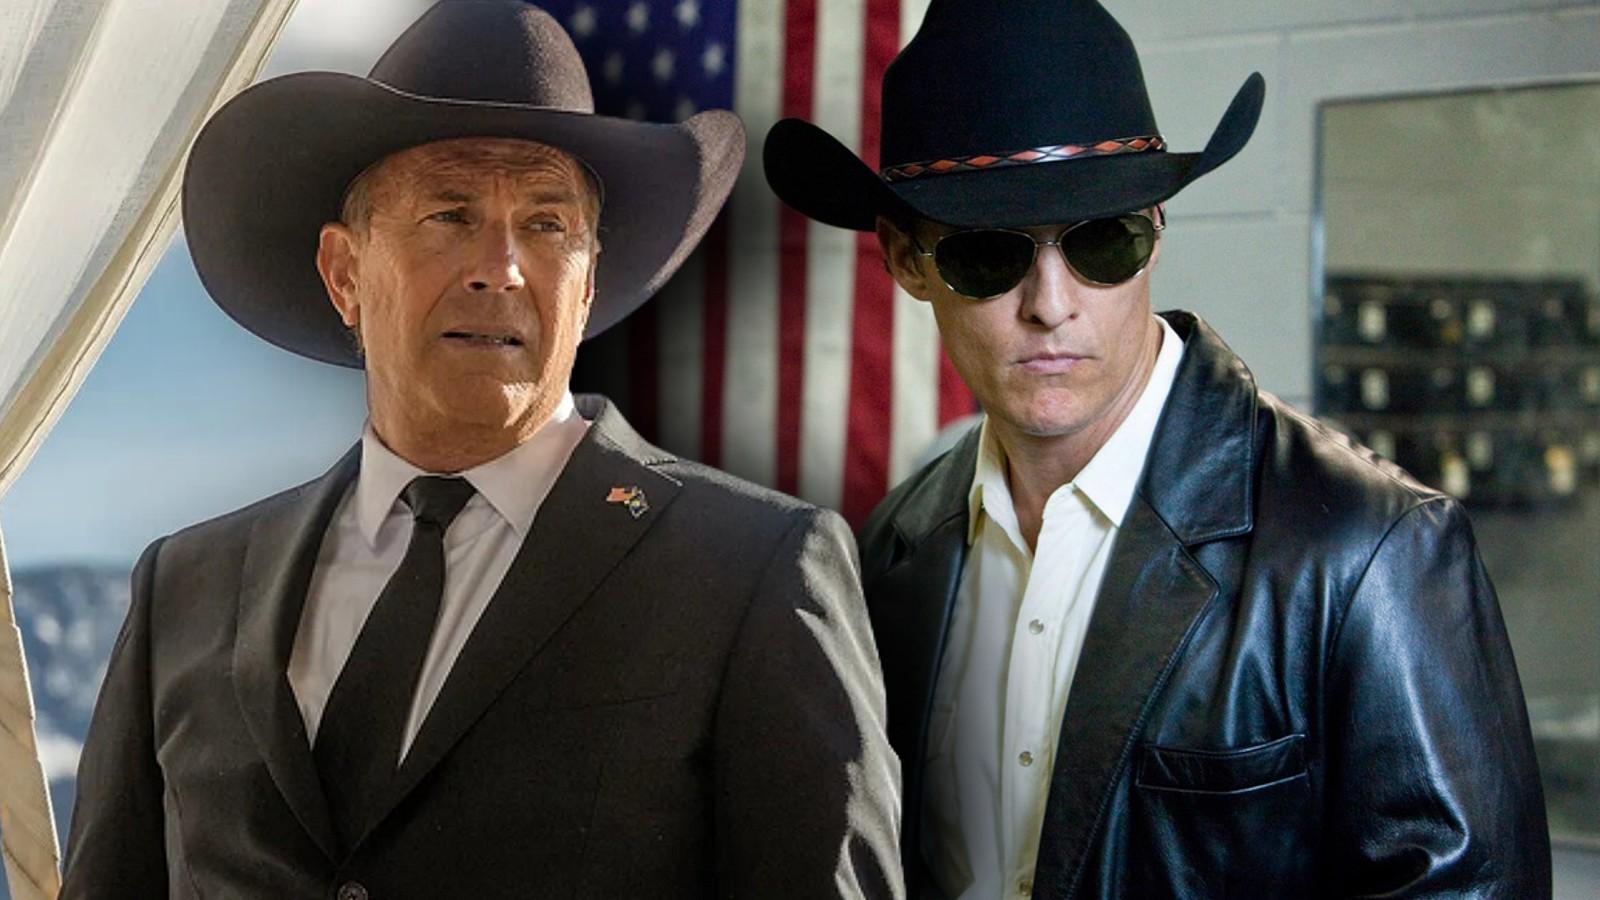 Kevin Costner in Yellowstone and Matthew McConaughey in Killer Joe